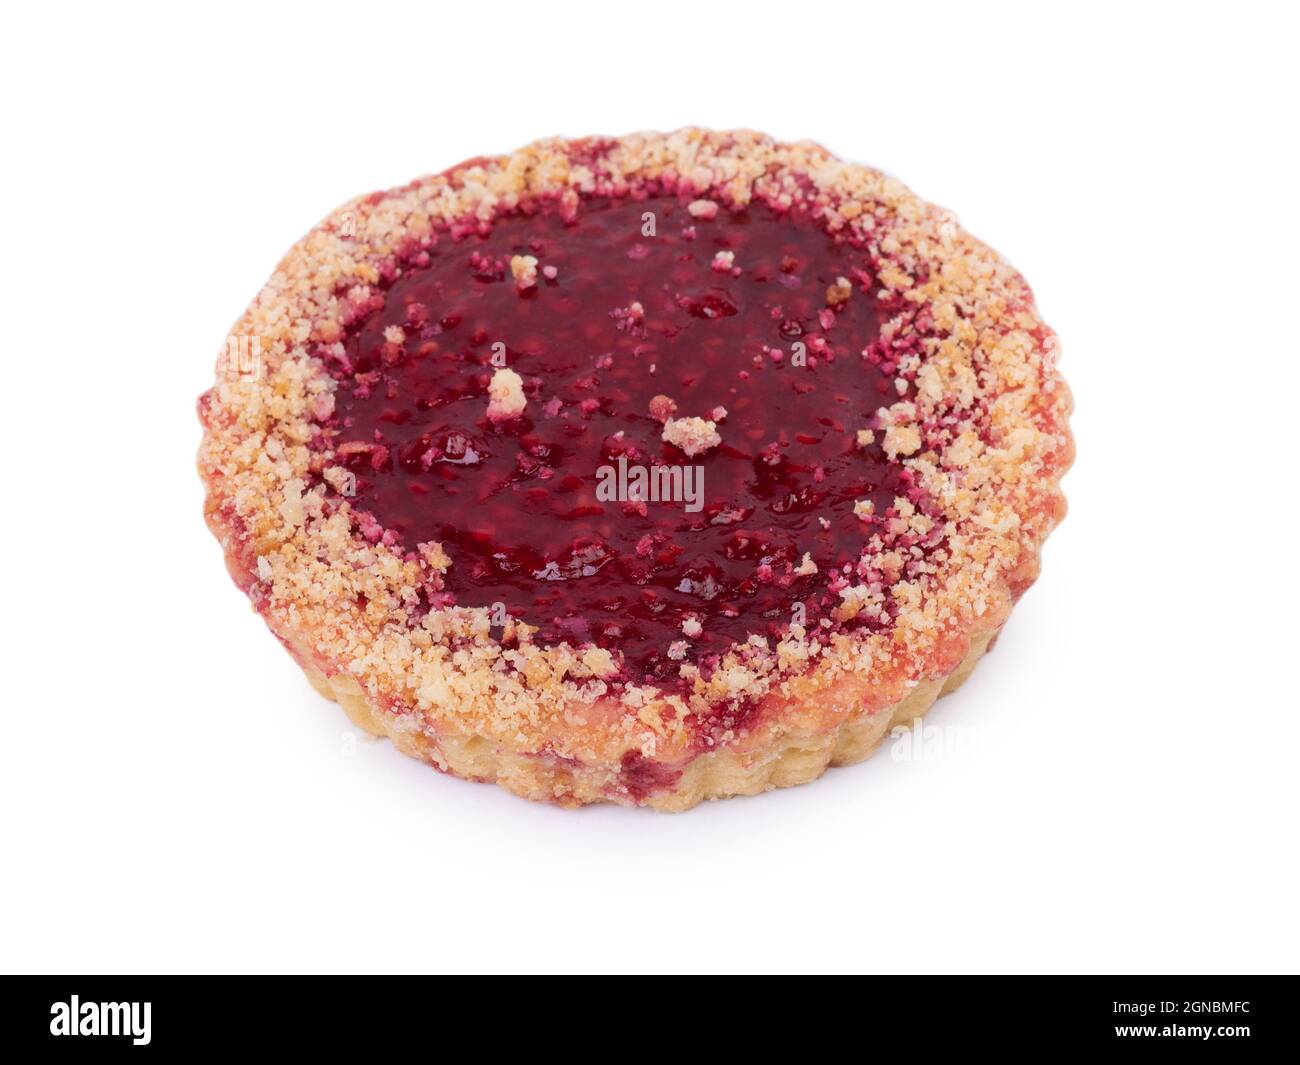 Cherry pie isolated on white background Stock Photo